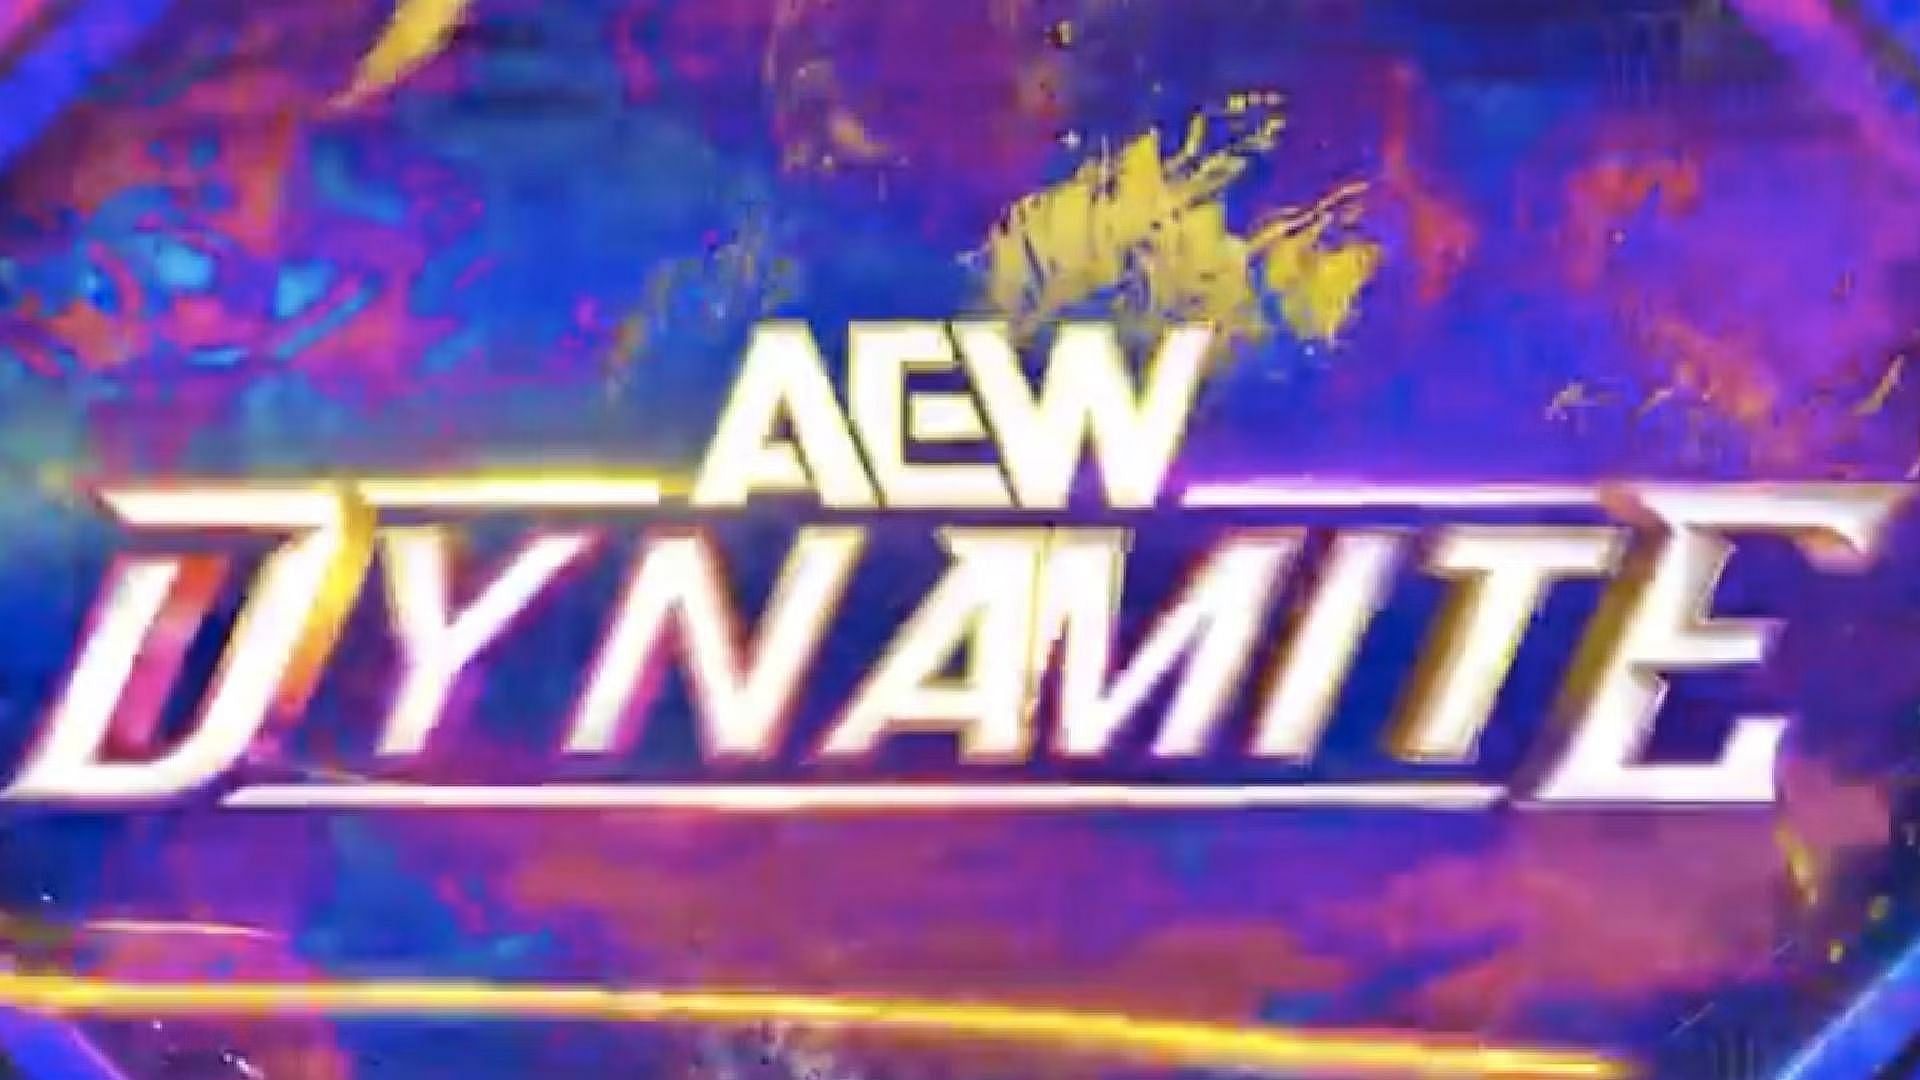 Dynamite is AEW